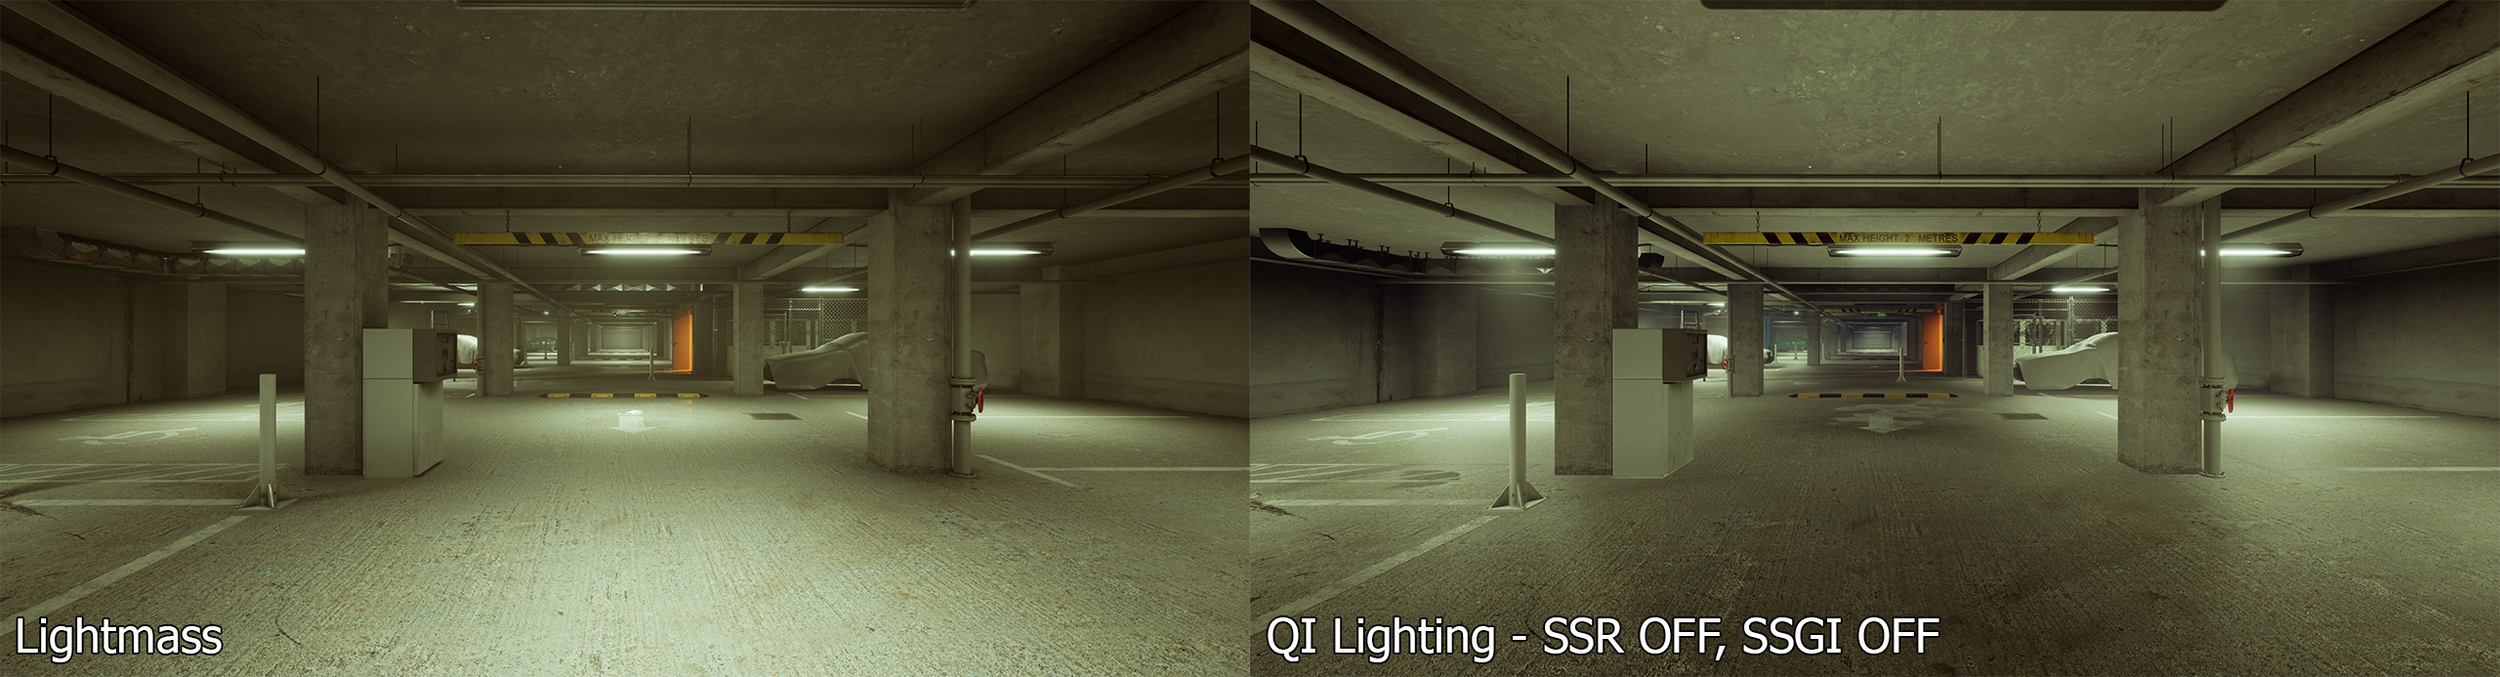 QI_Lighting_Comparison_01.png